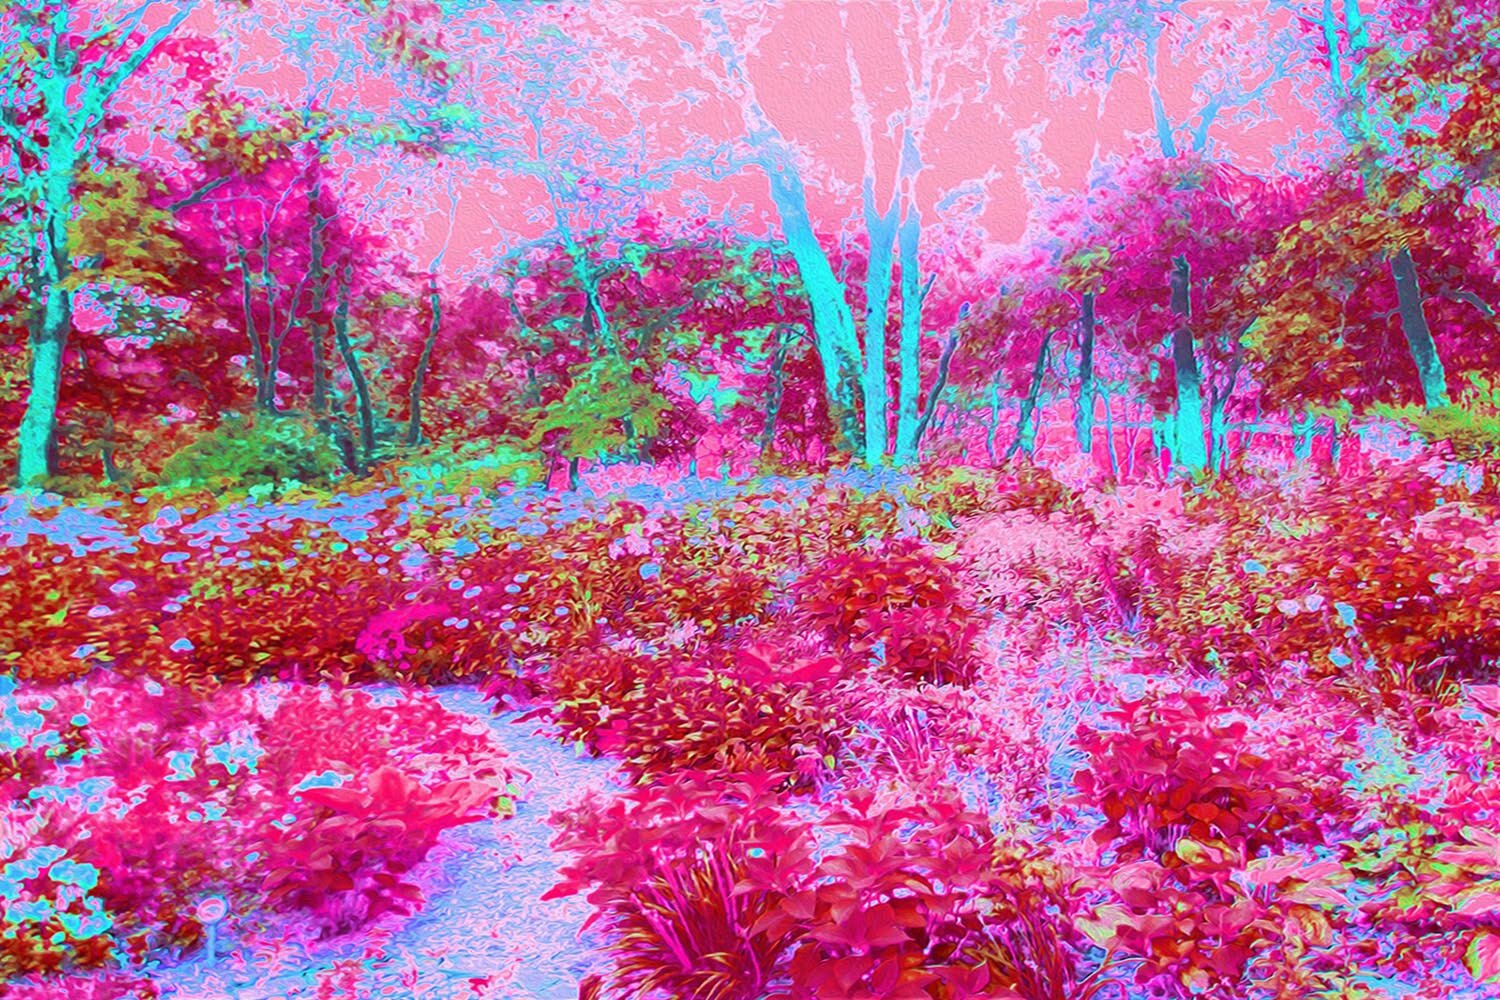 Impressionistic Red and Pink Garden Landscape